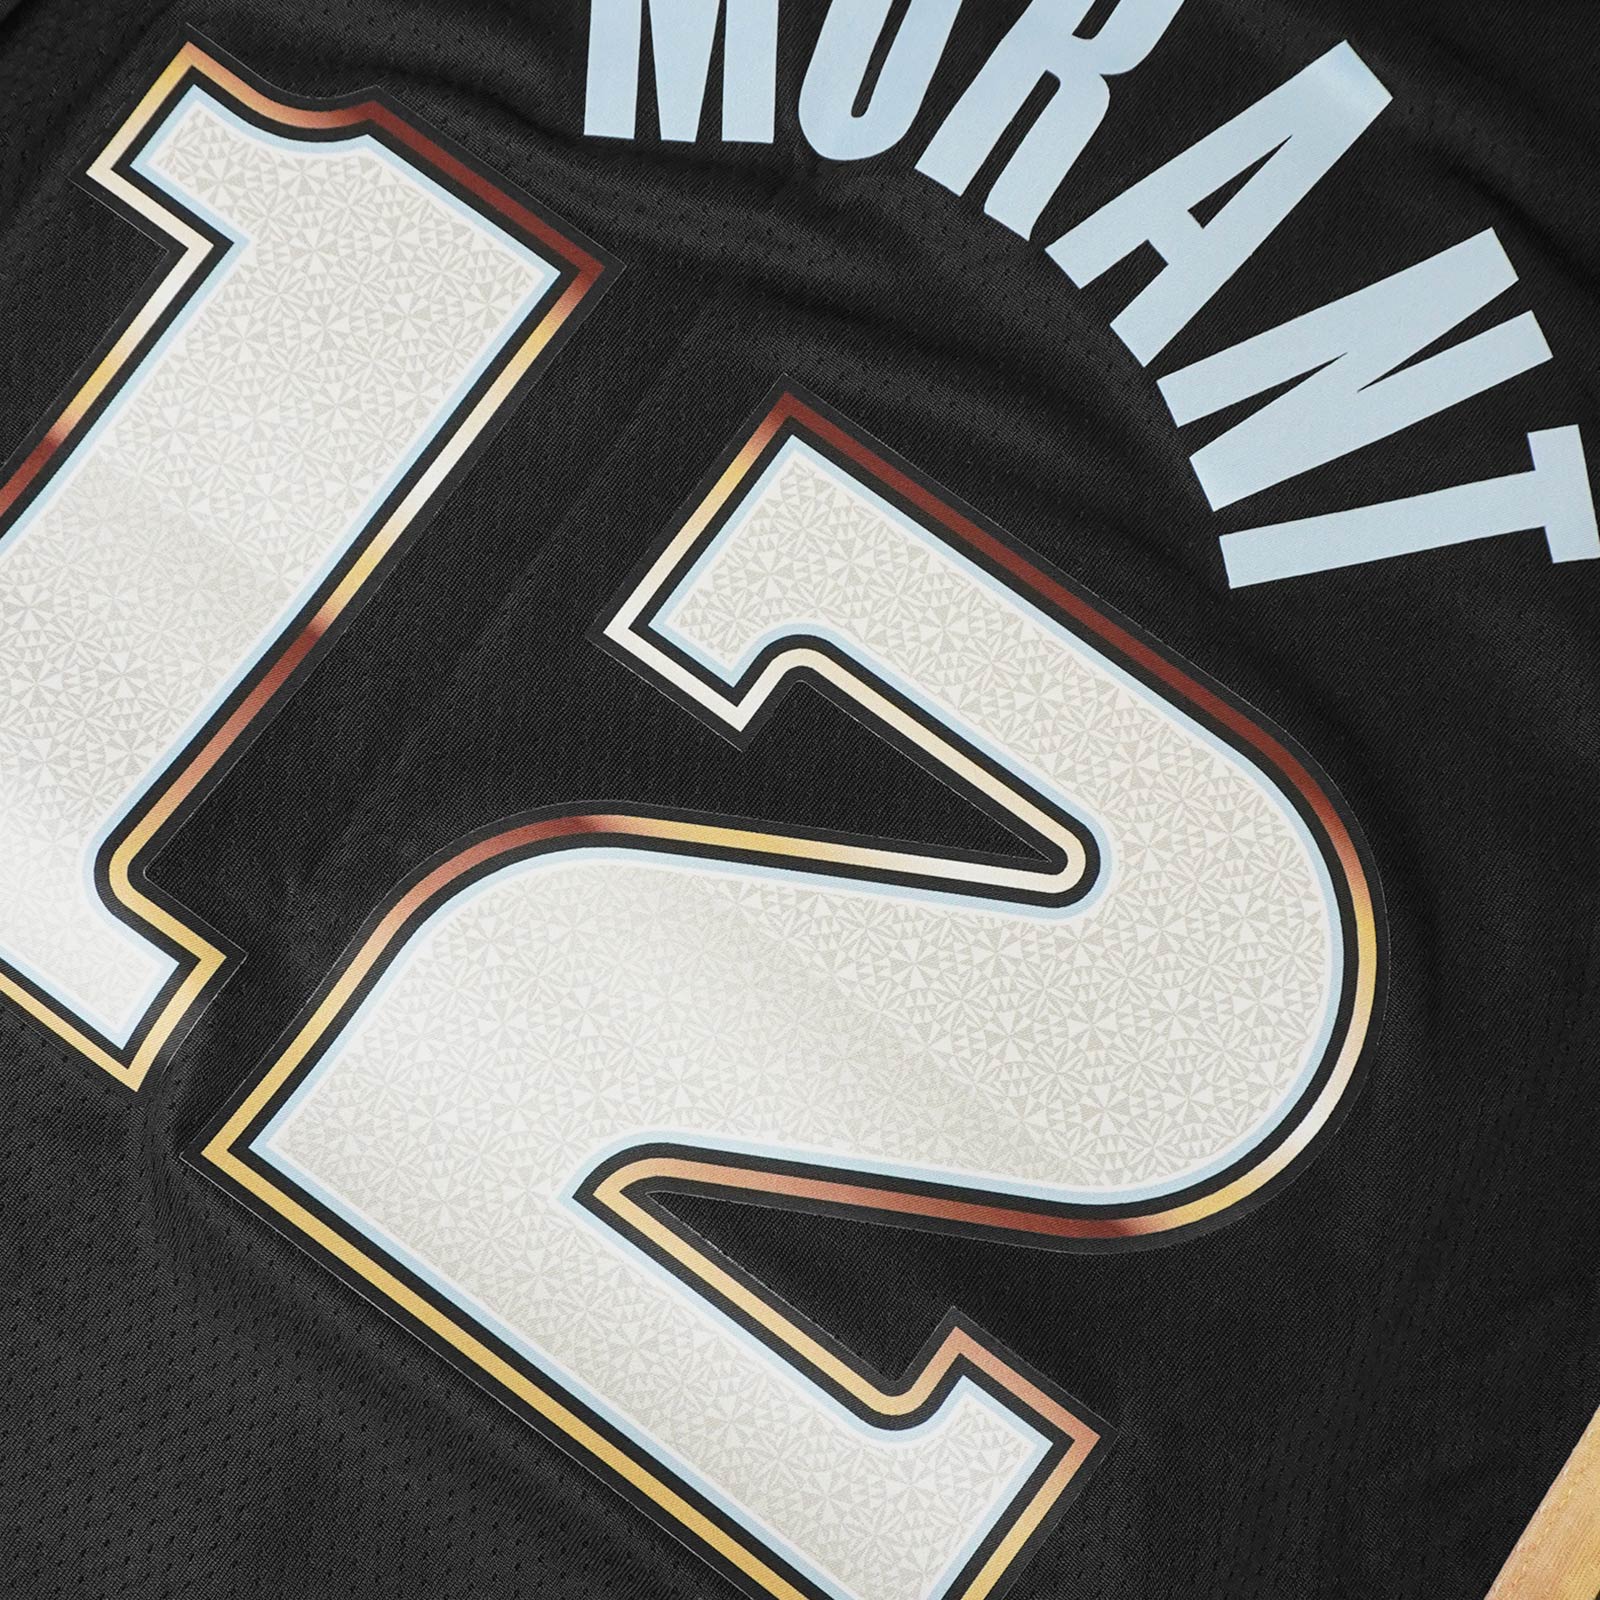 Ja Morant Memphis Grizzlies 2023 City Edition NBA Swingman Jersey